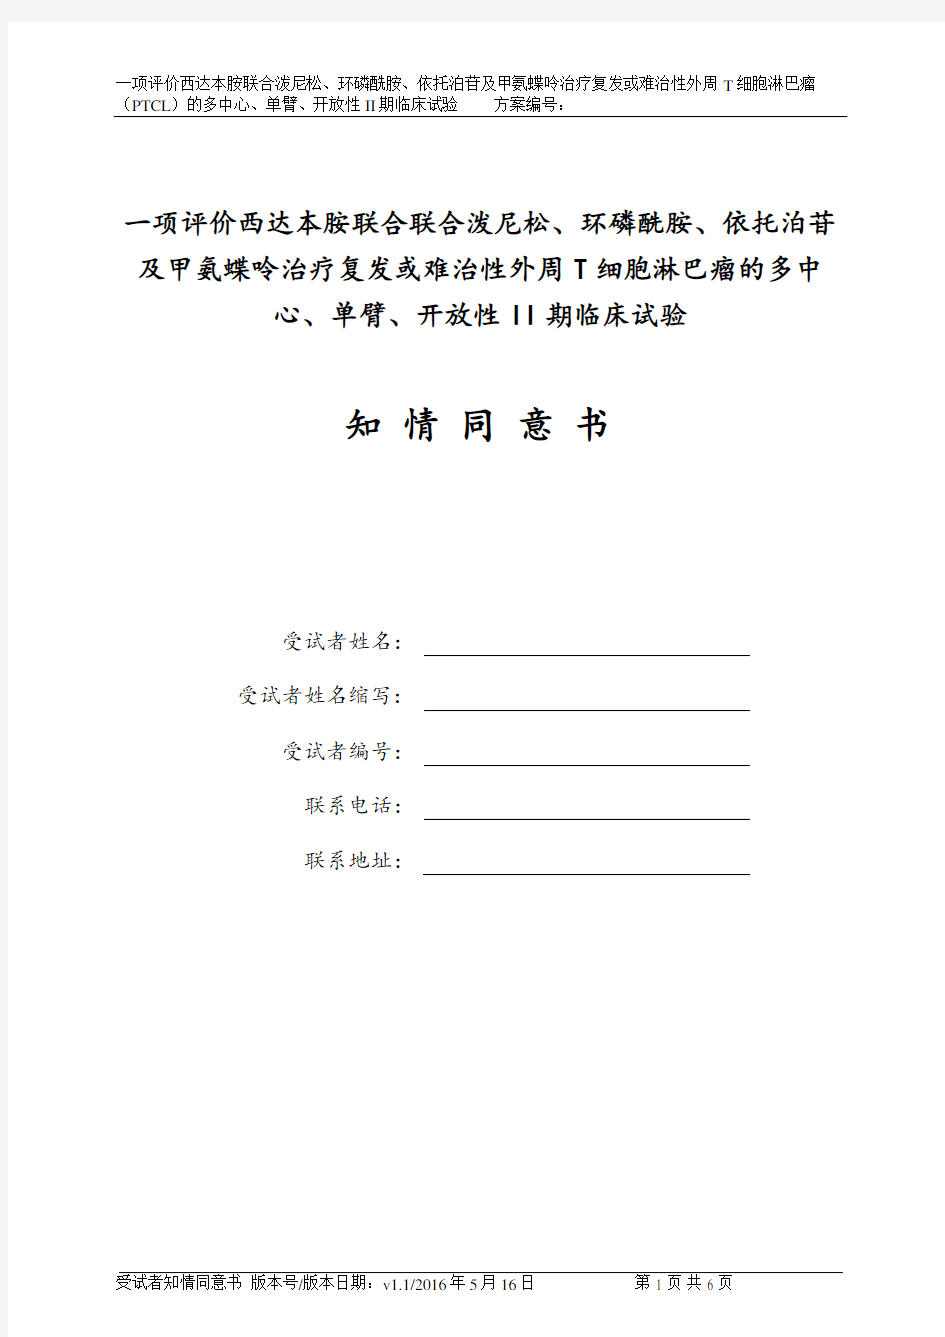 ICF - 中国临床试验注册中心